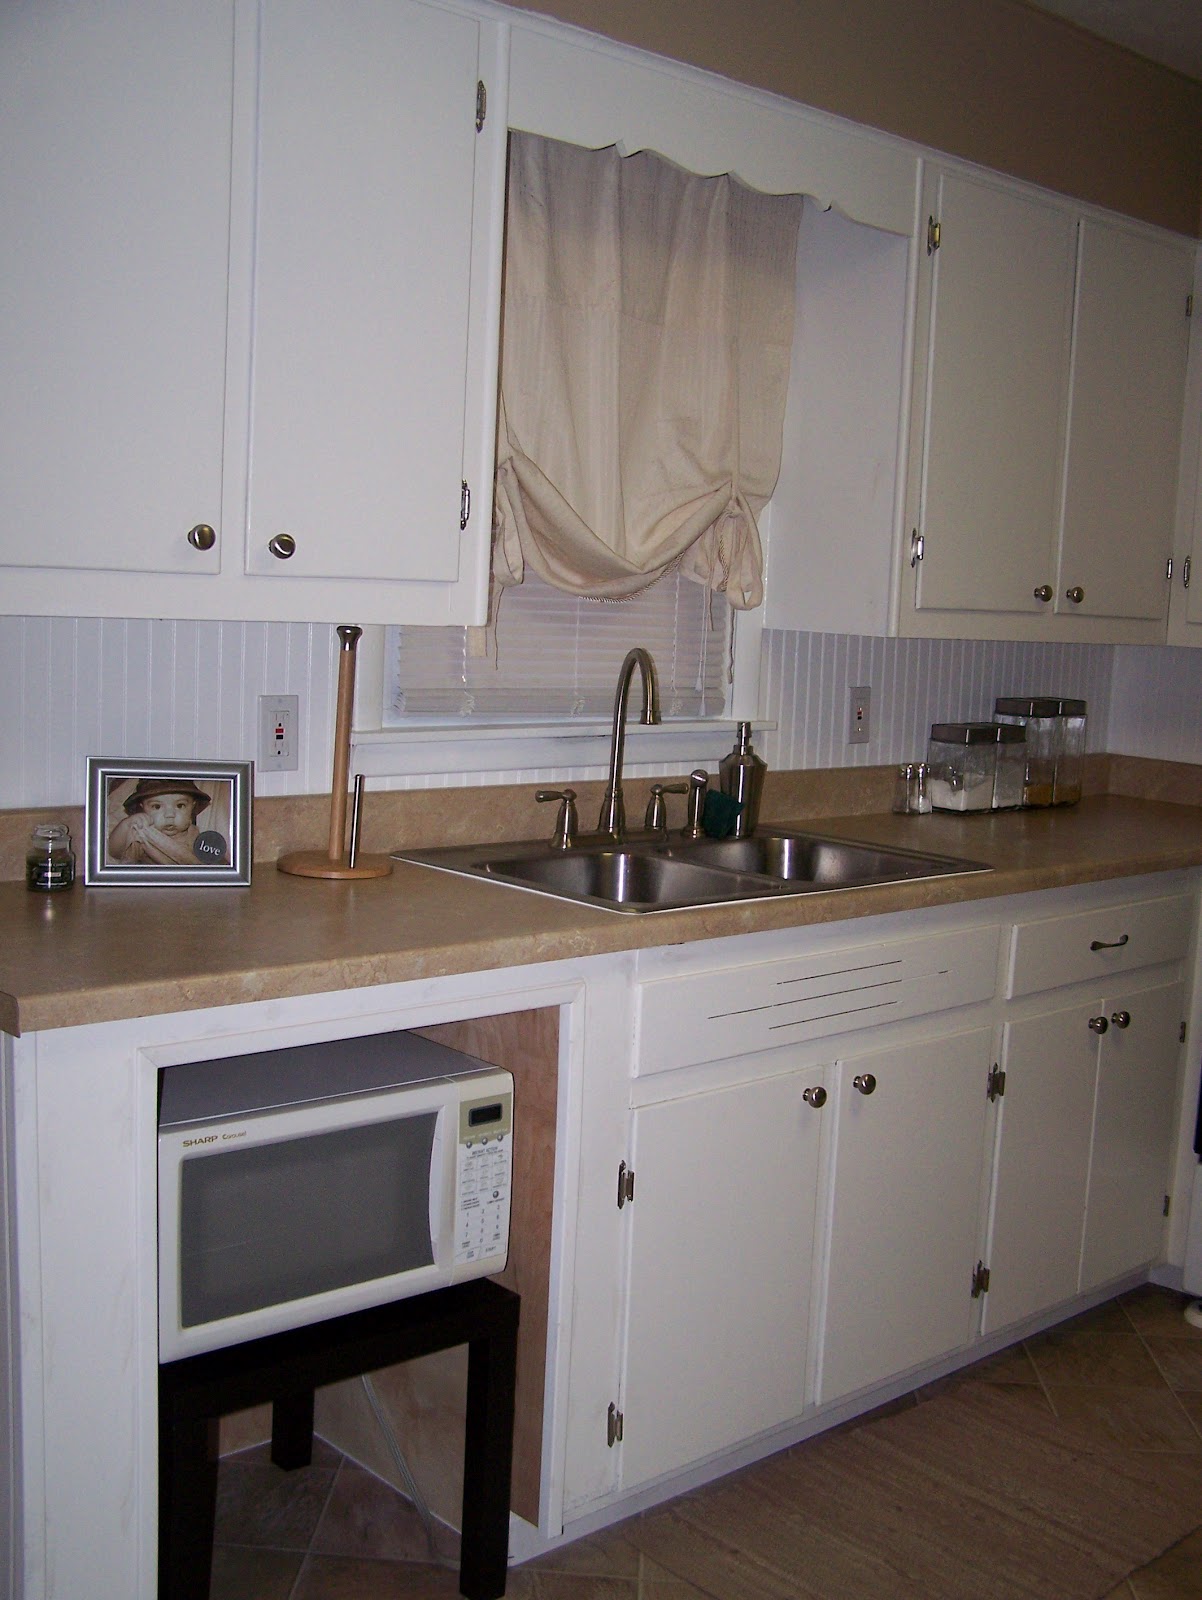 Grace Lee Cottage: Updating old kitchen cabinets